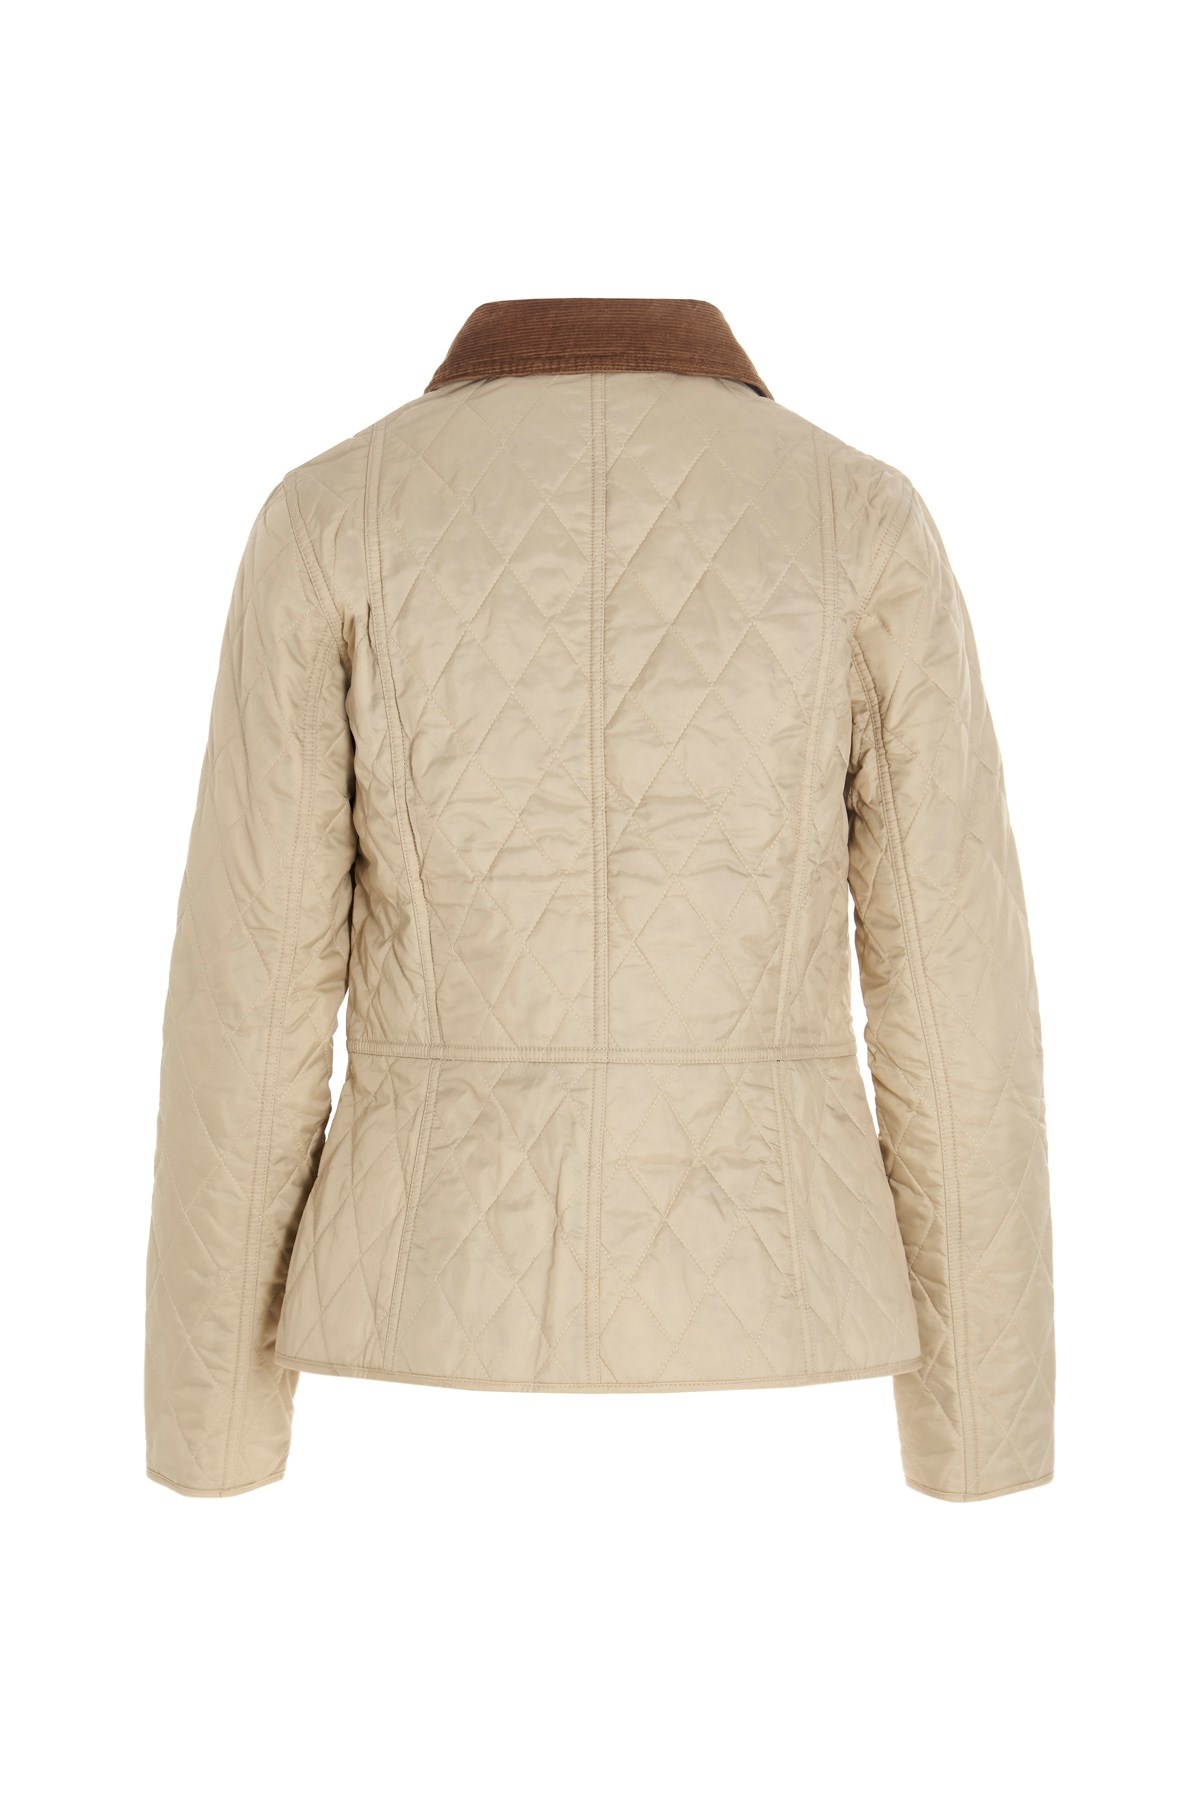 'Liddesdale' jacket - 2